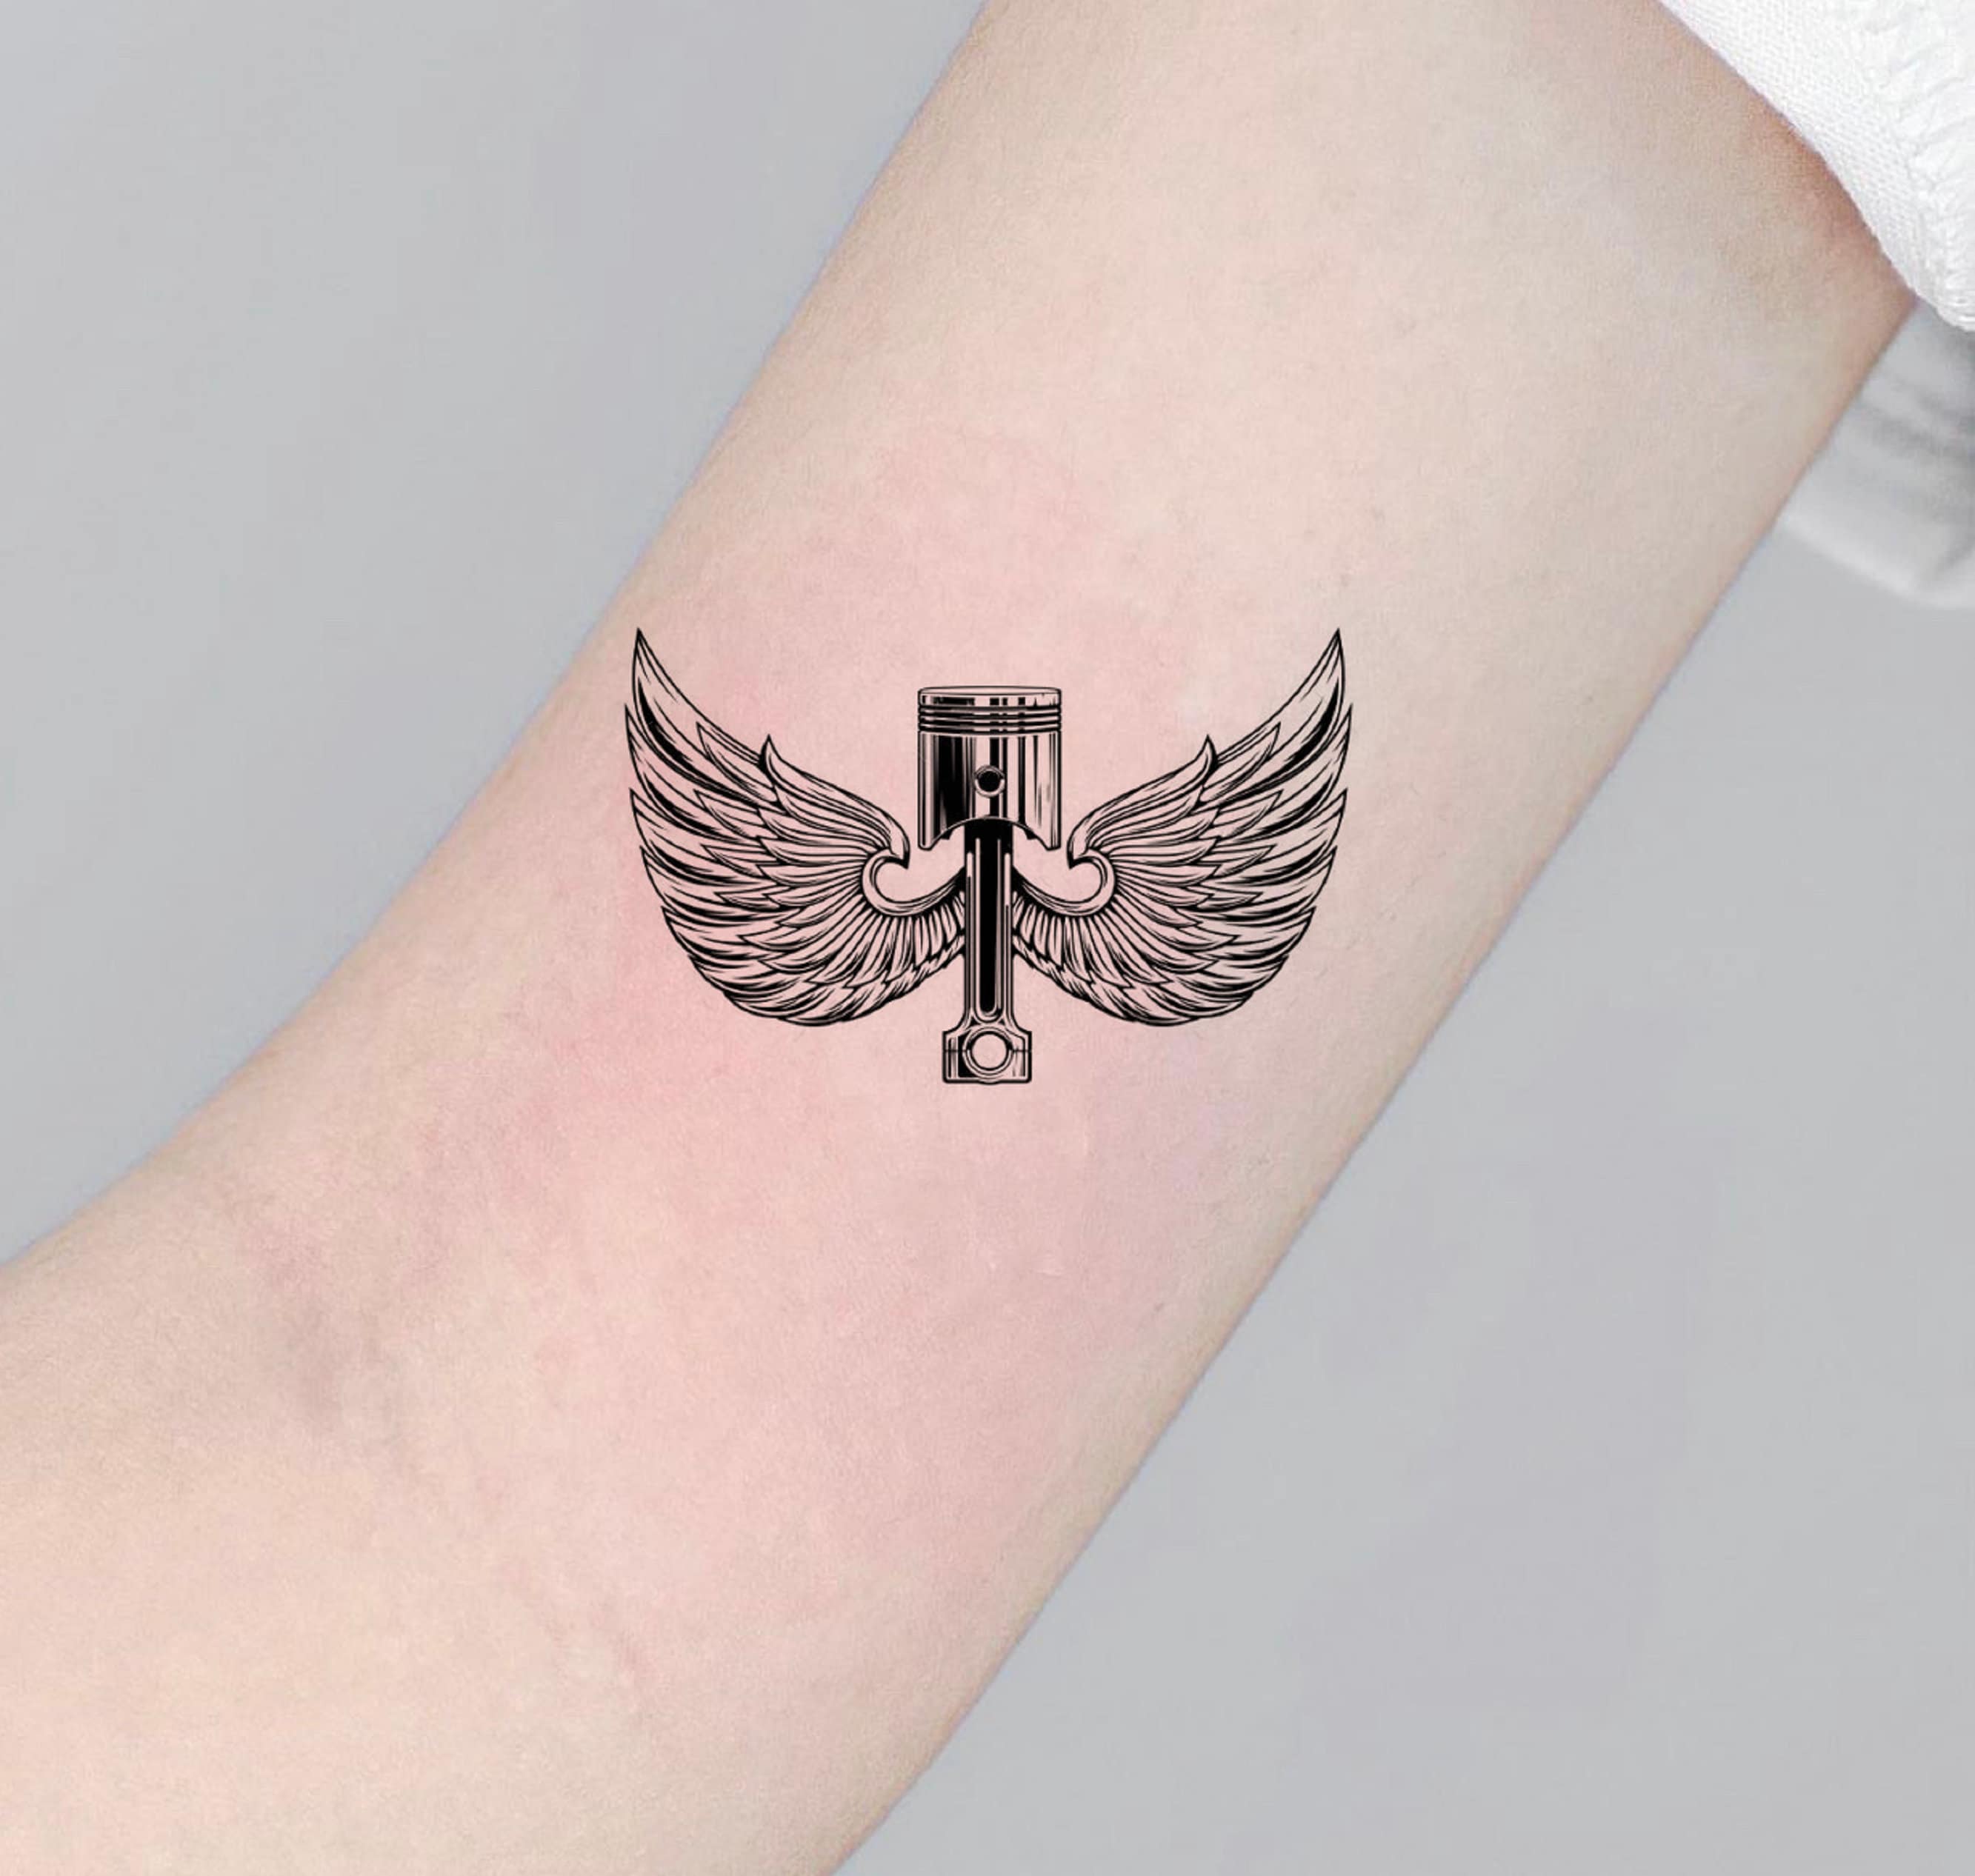 Piston Tattoo | by Art la mancha Gallardo at Just Deadly Tat… | Flickr